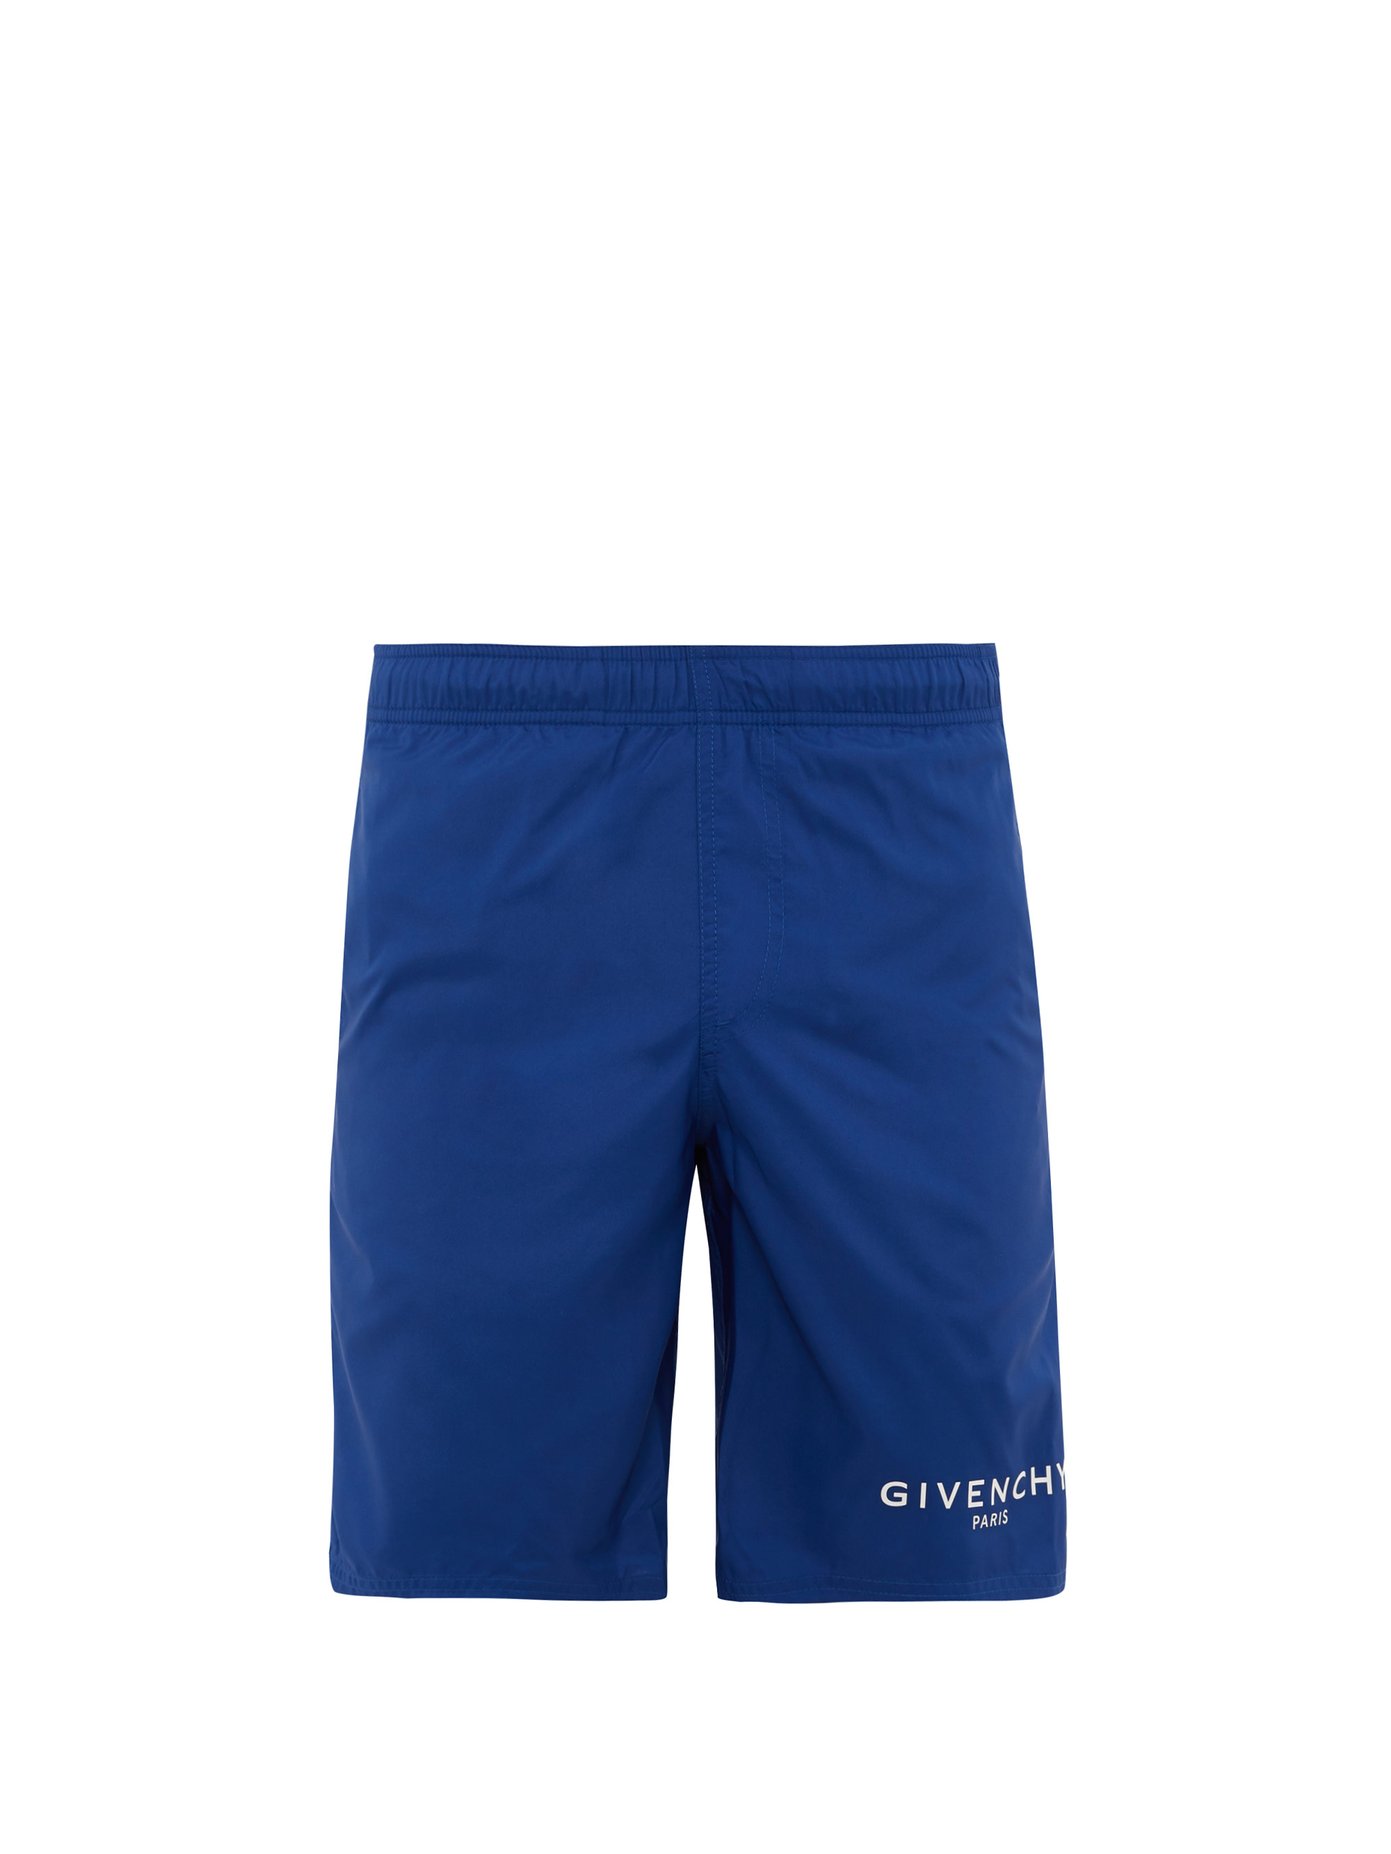 blue givenchy shorts